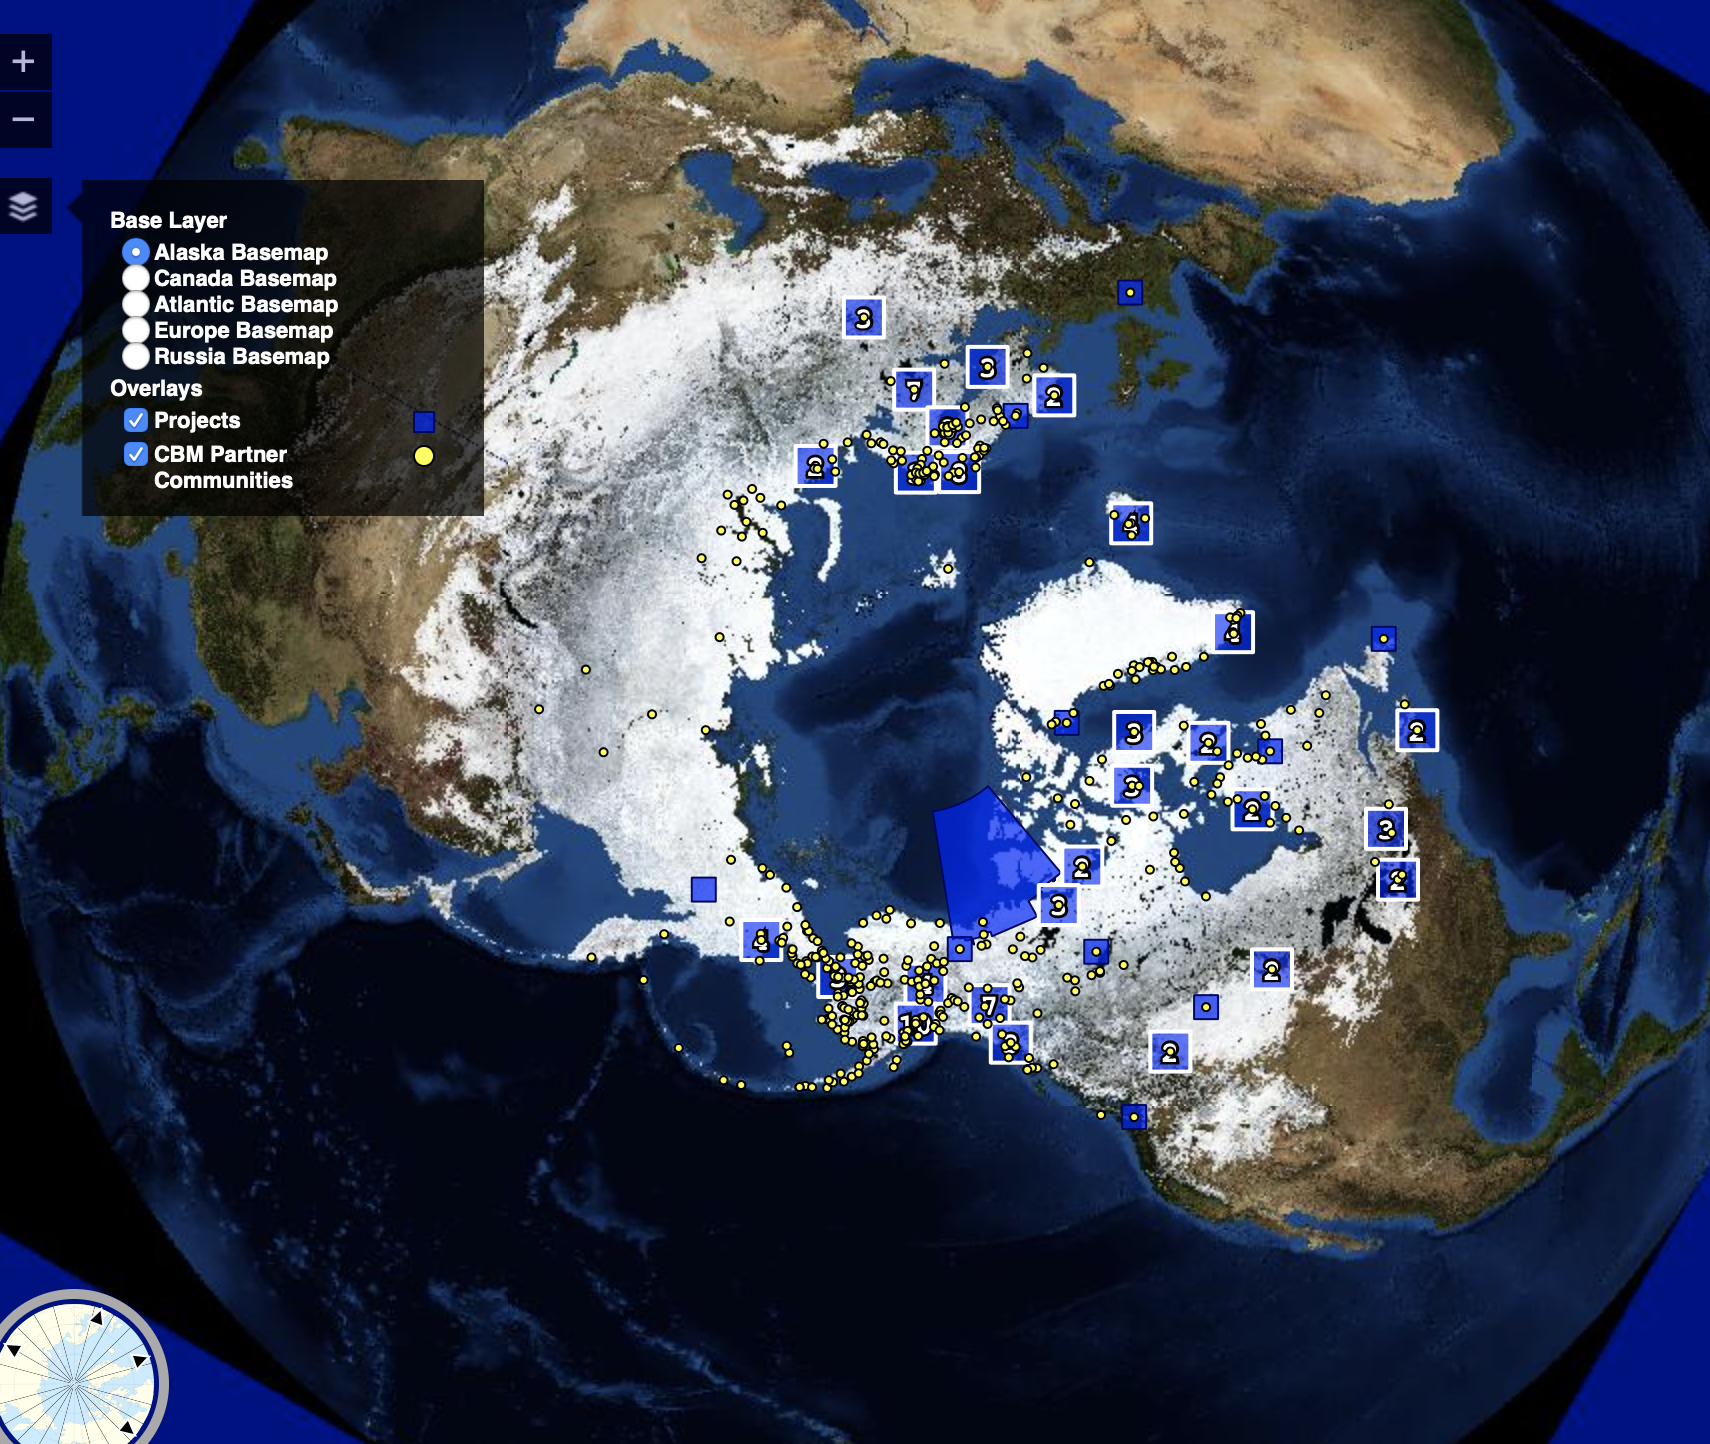 Arctic CBM Atlas